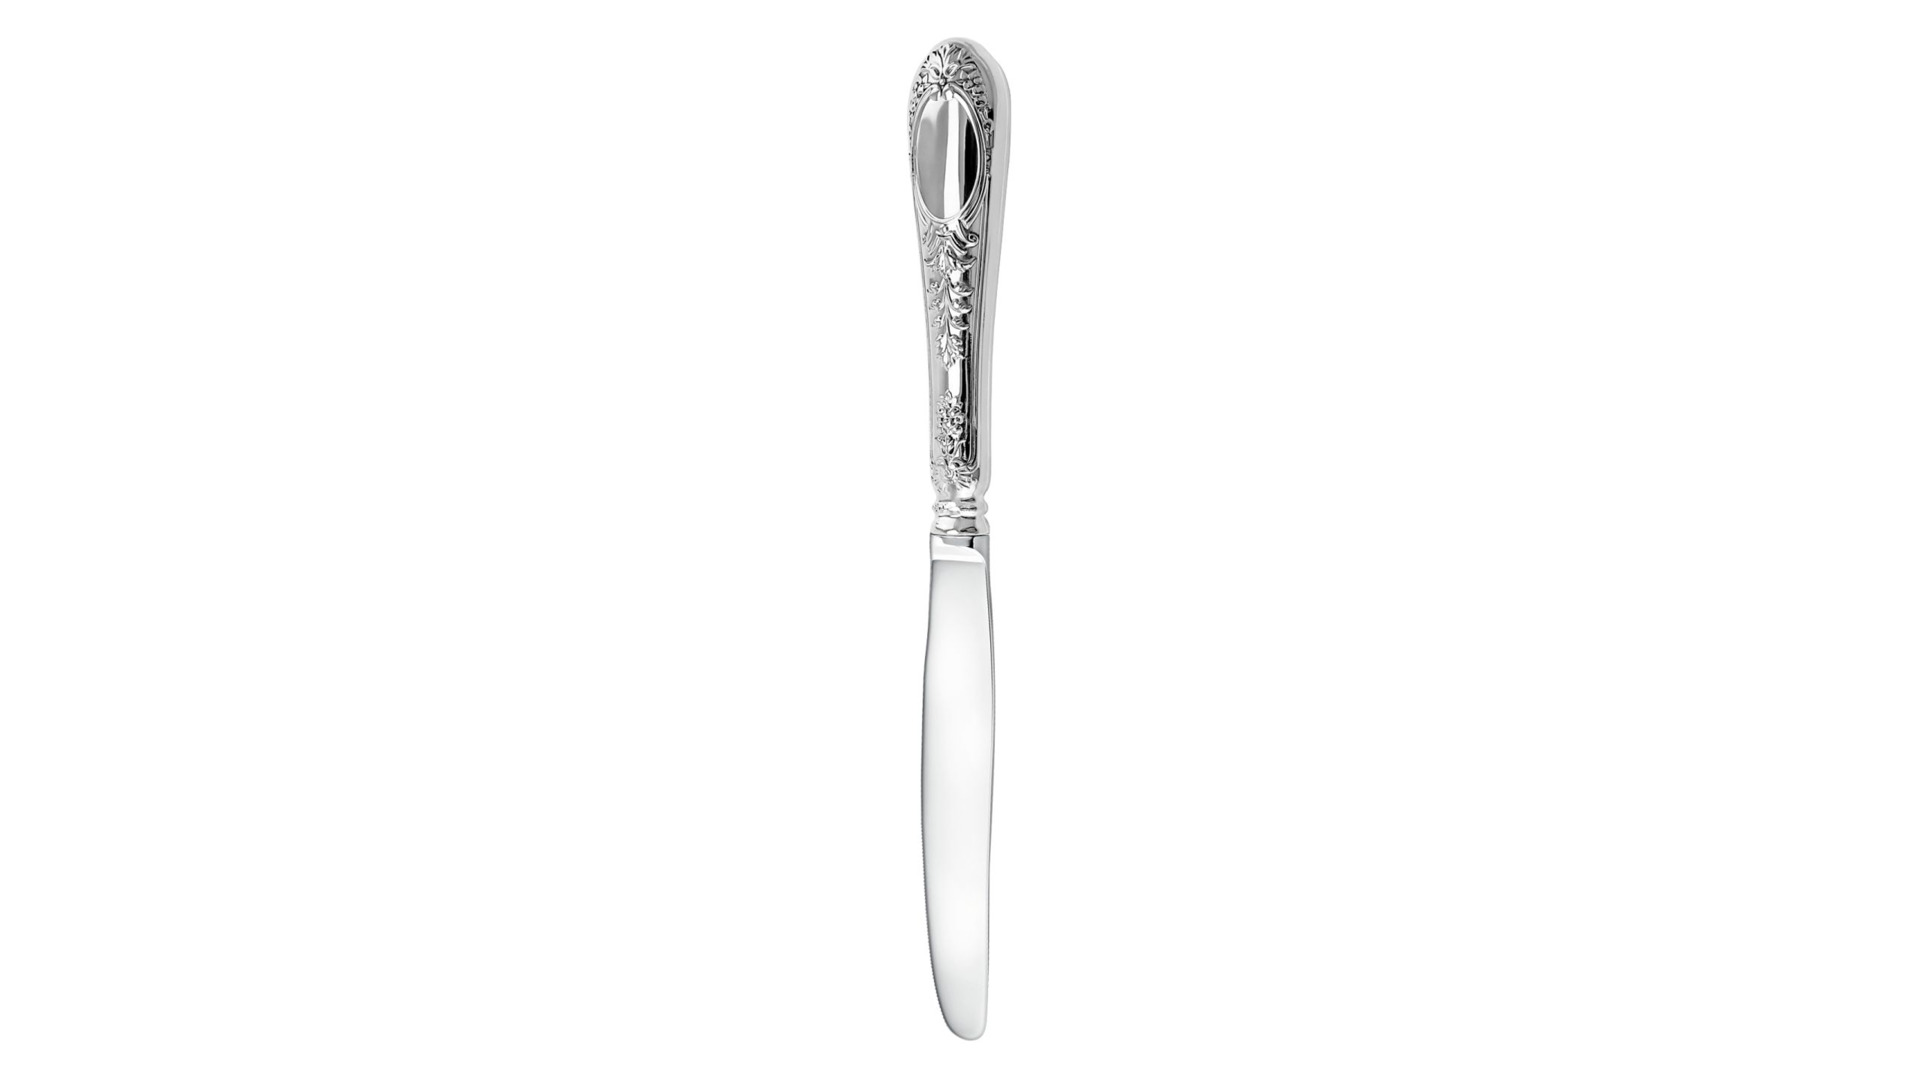 Нож десертный АргентА Фамильная 111,72 г, серебро 925